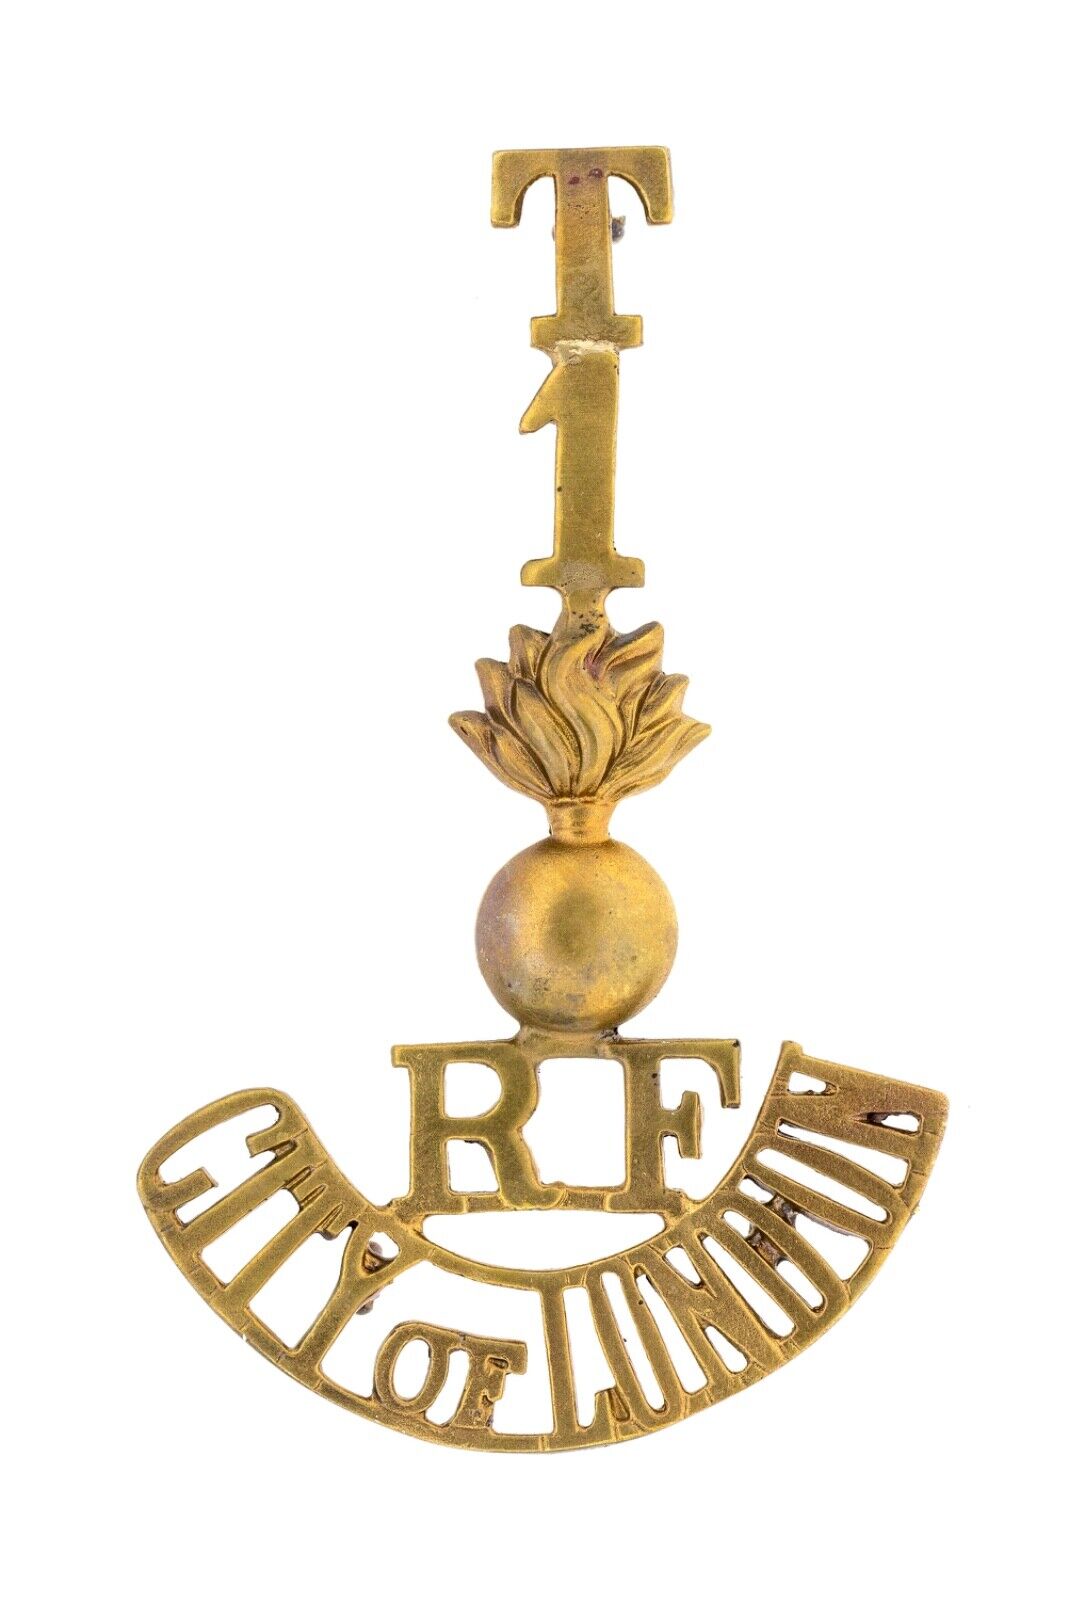 T.1 Royal Fusiliers City of London Shoulder Title Brass Metal